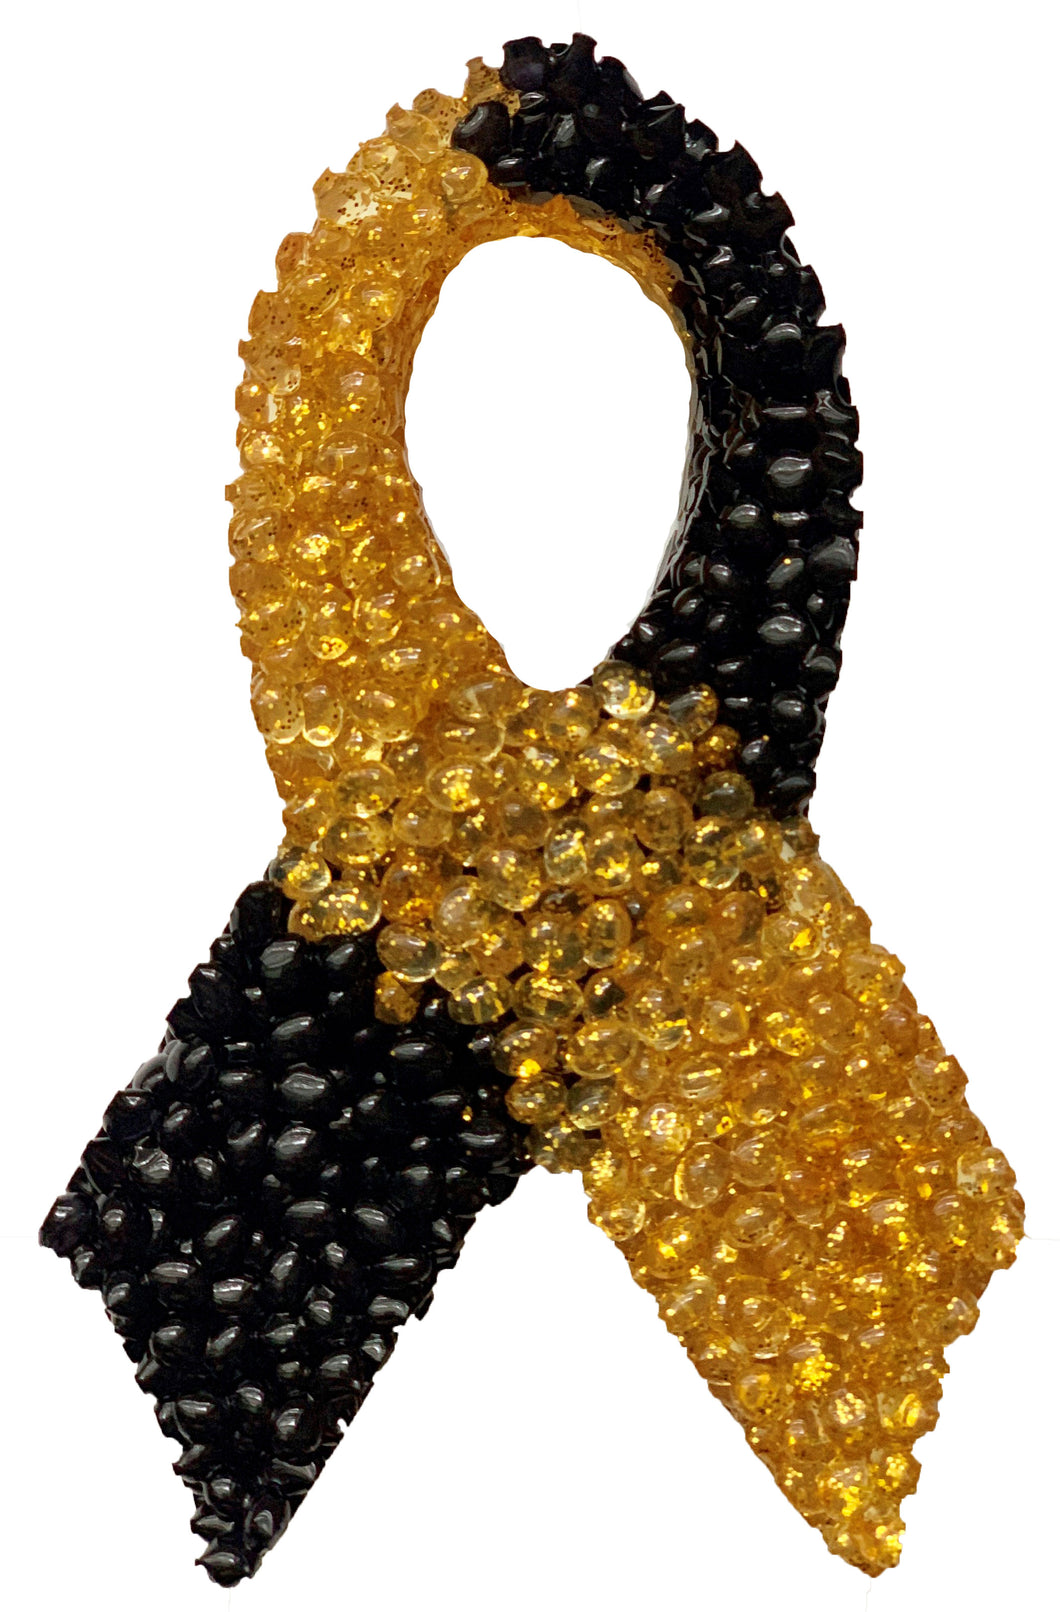 Black and Gold Awareness Ribbons